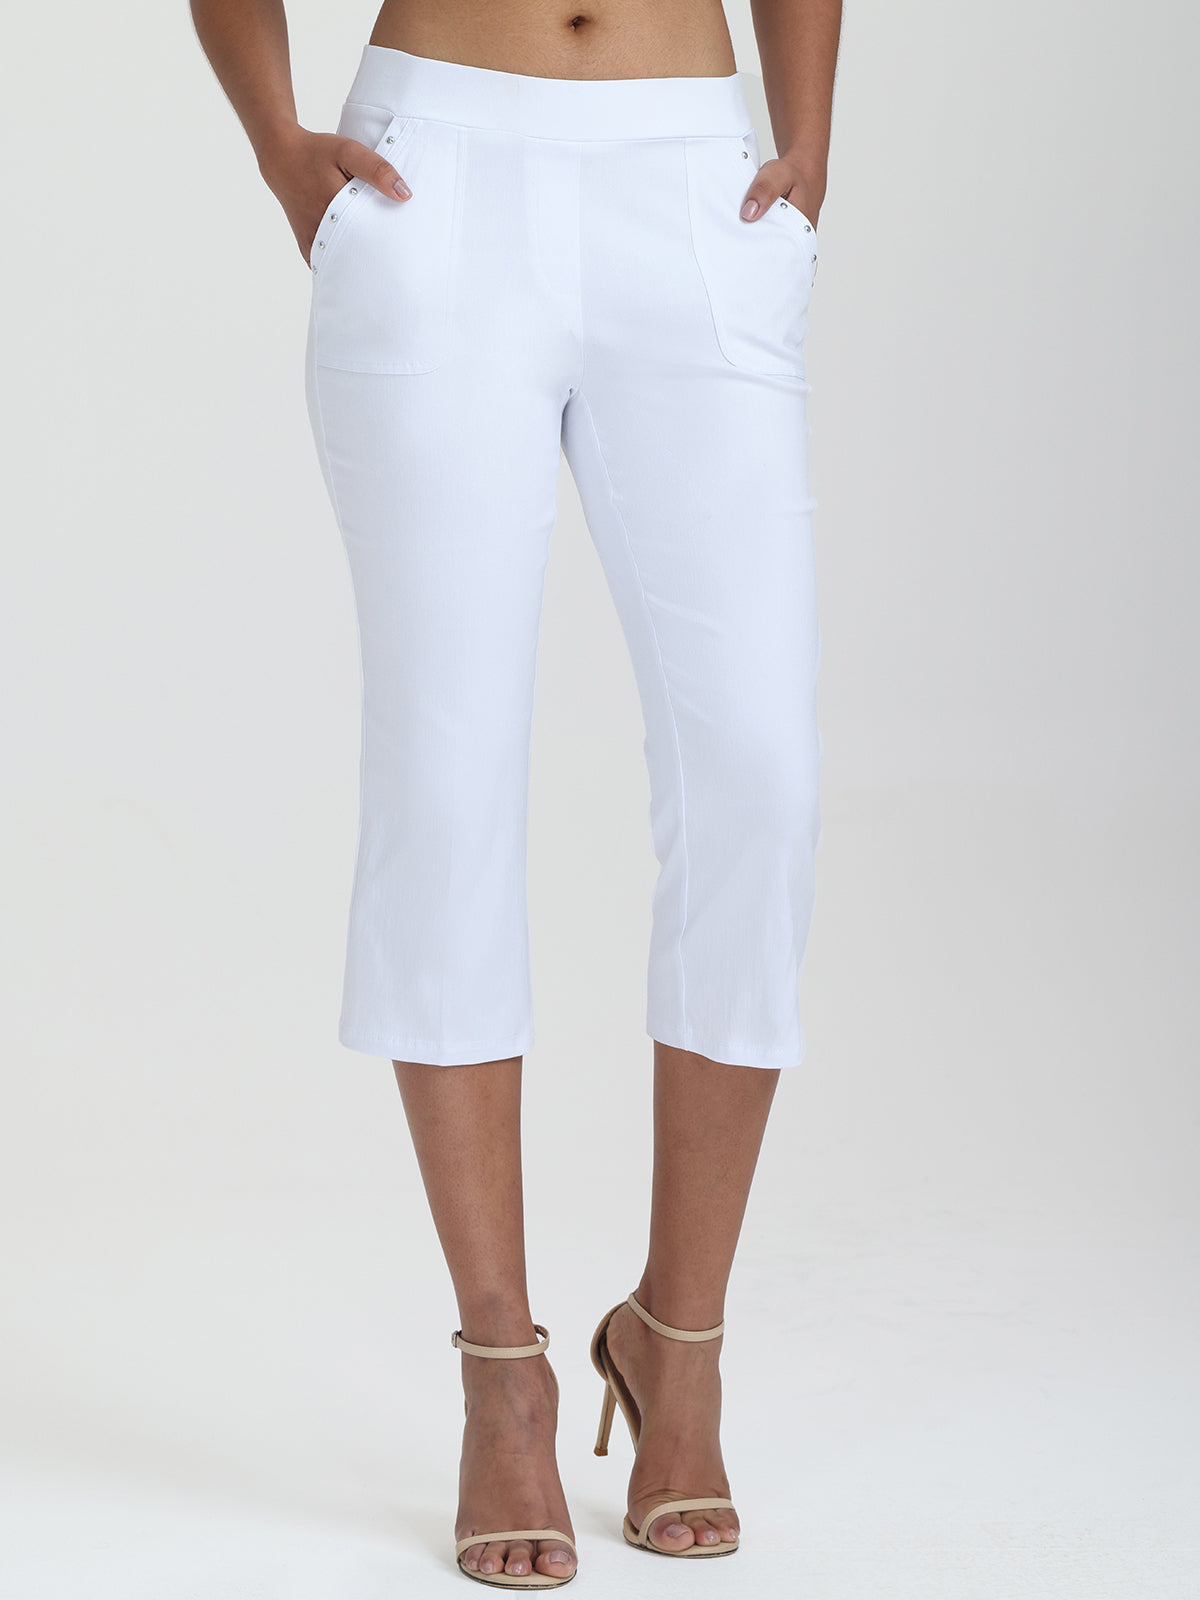 Stichting Nidos  Sonoma Women's Life+style Capri Pants Size 14